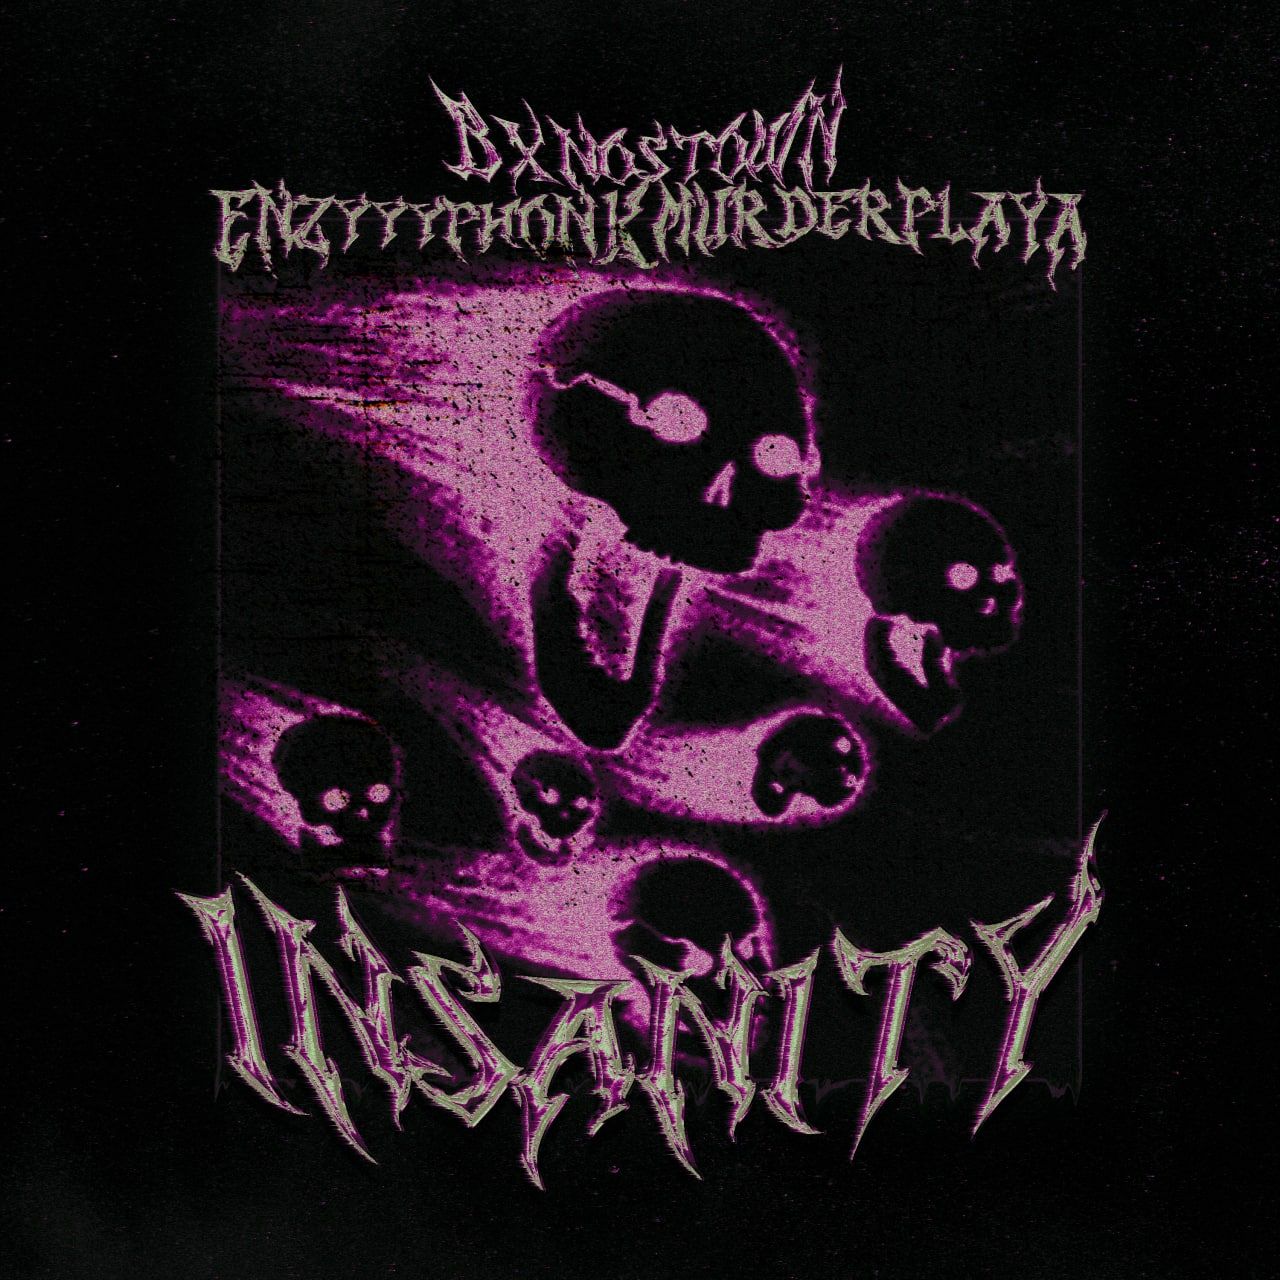 Descarca Insanity-BXNOSTOWN & ENZYYYPHONK & MURDERPLAYA